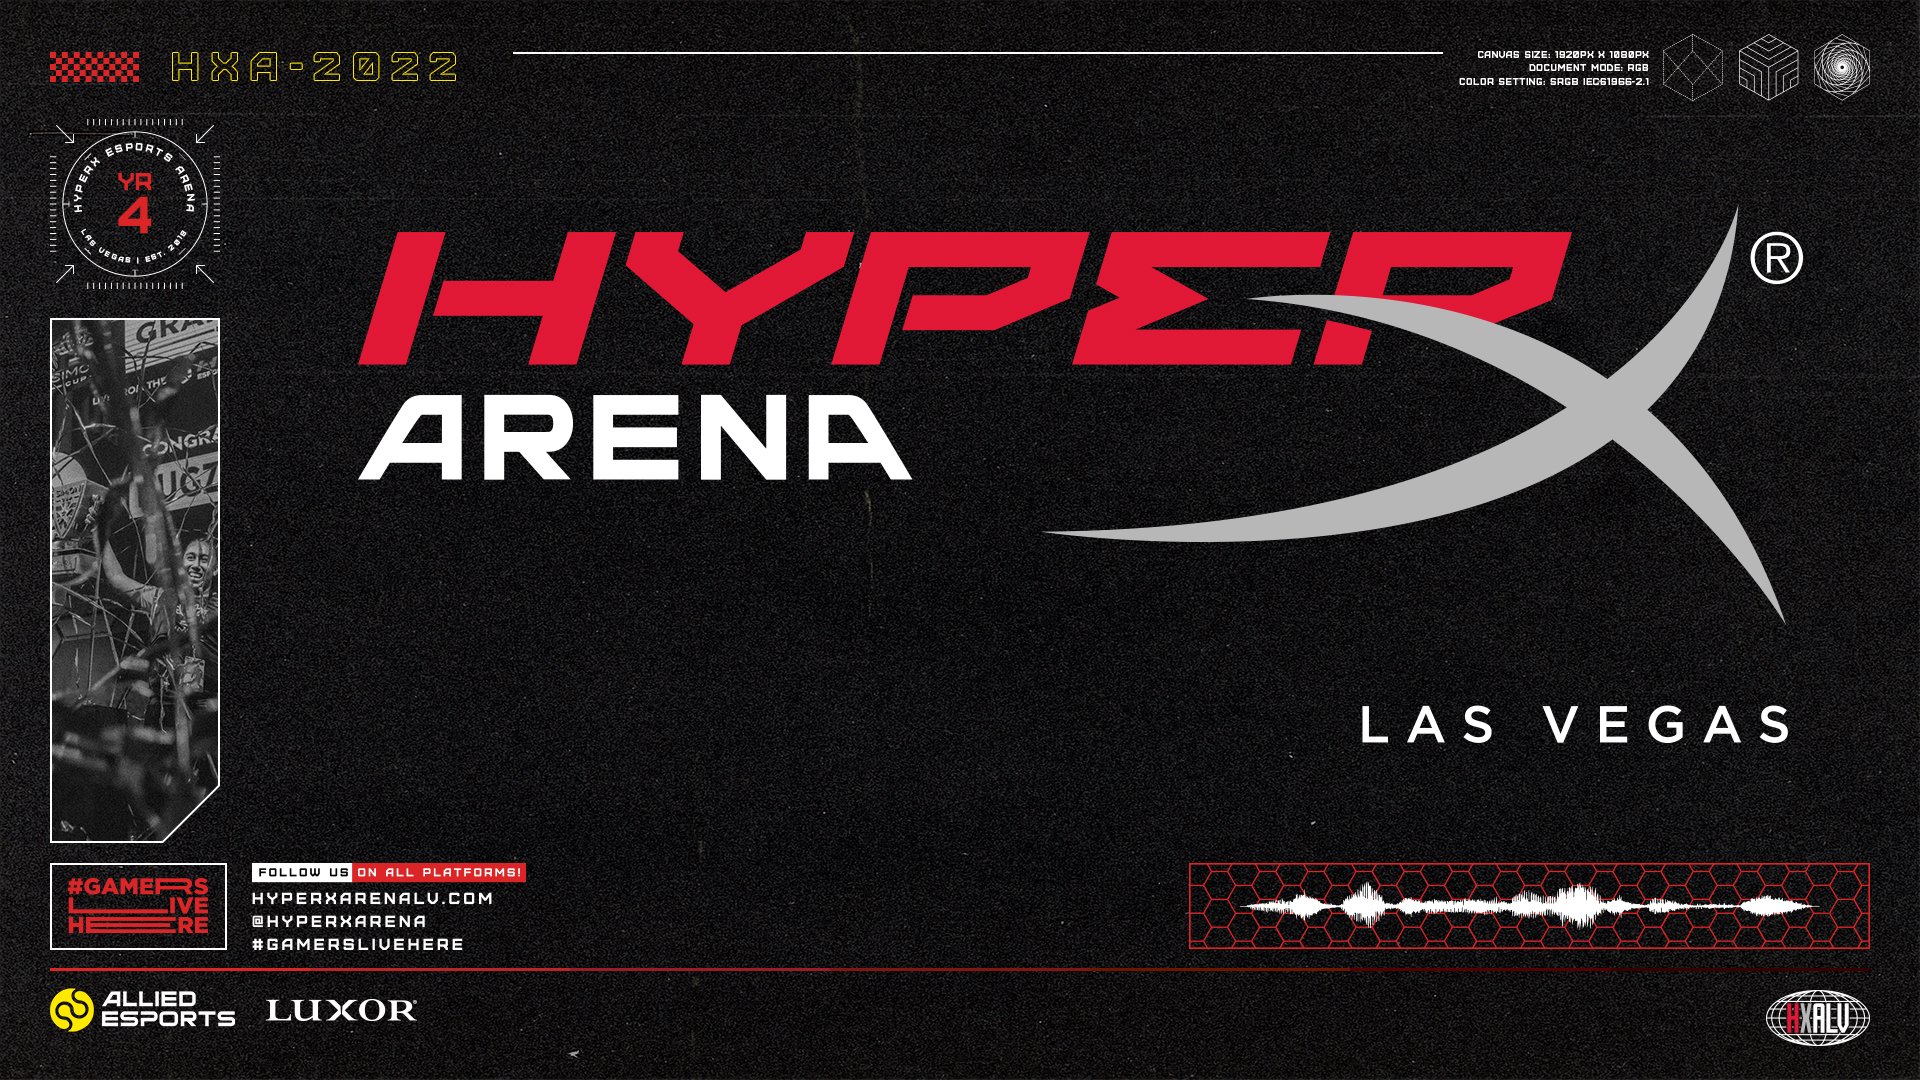 HyperX Arena Las Vegas at the Luxor